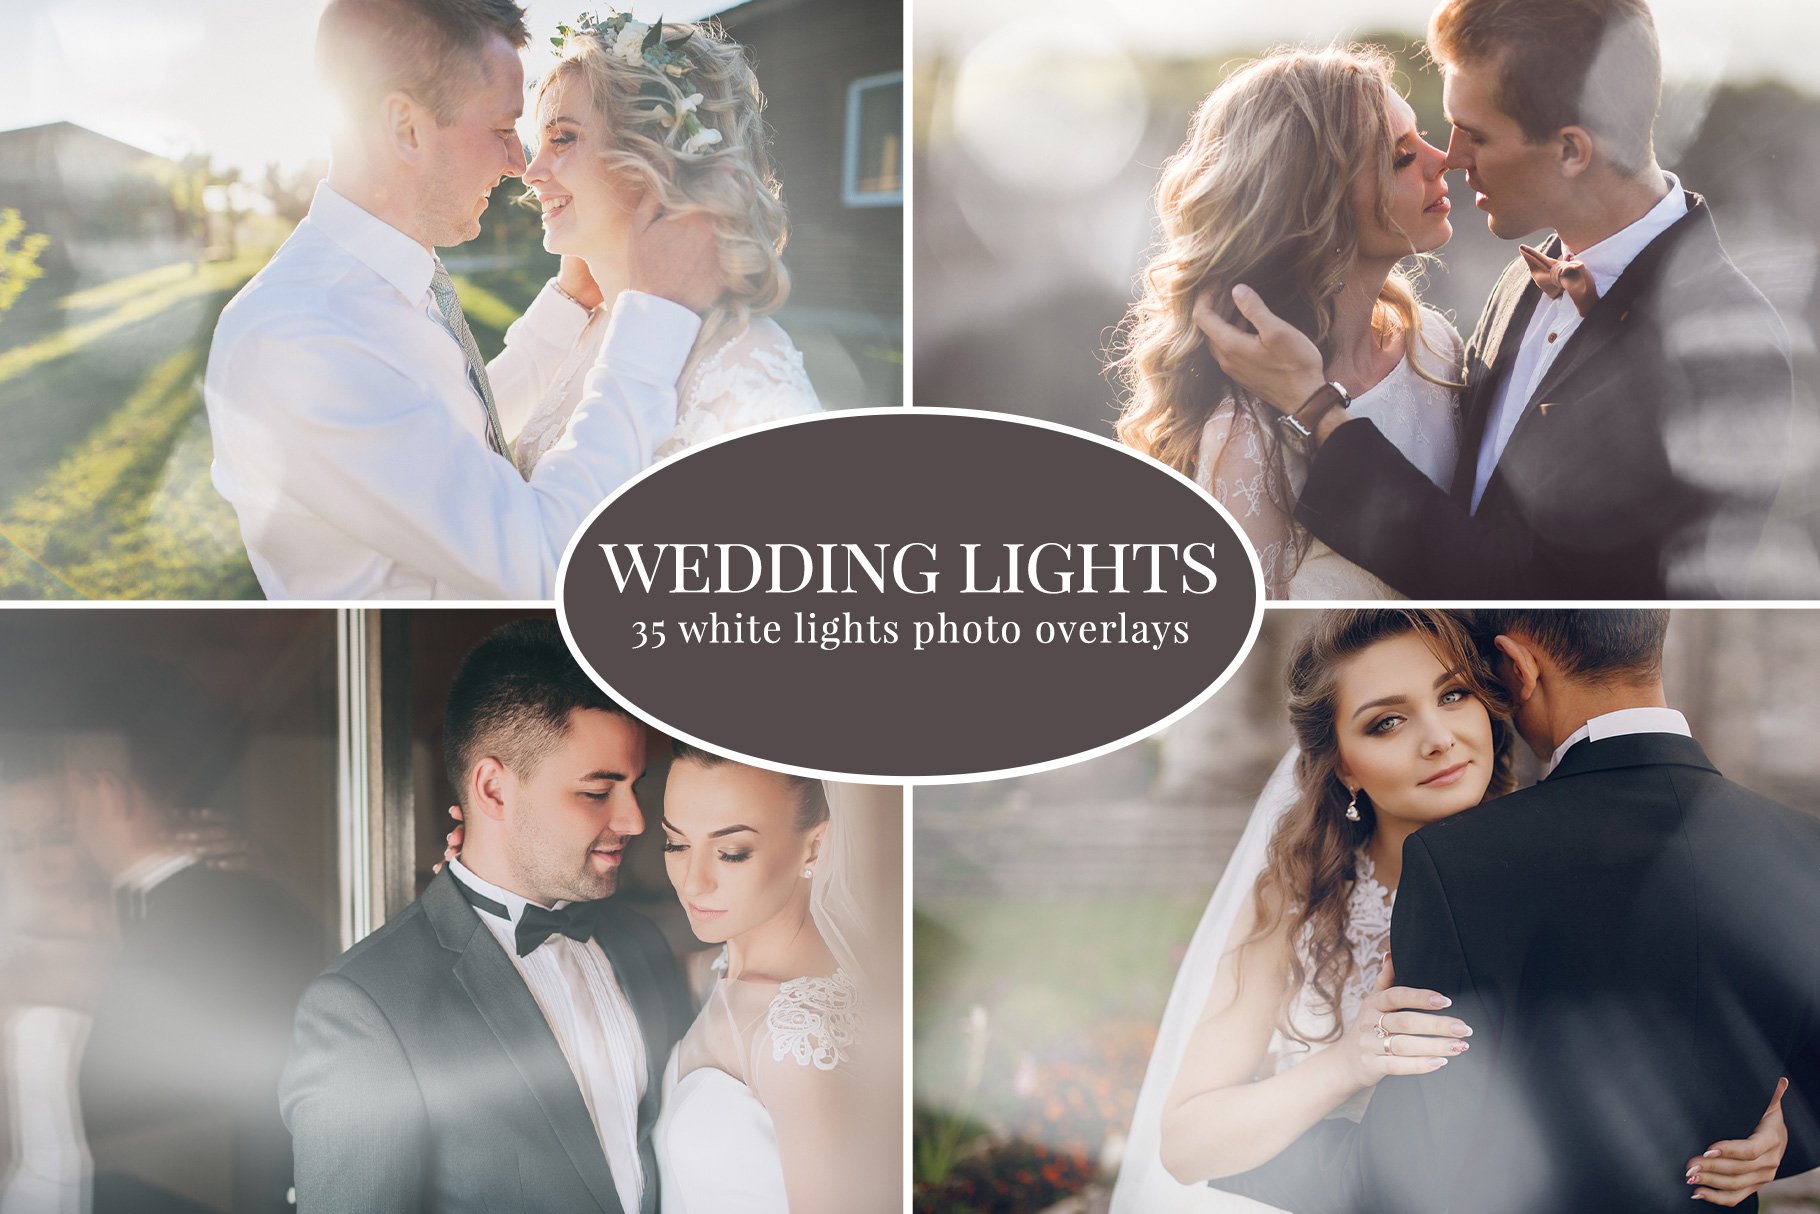 Wedding Lights photo overlayscover image.